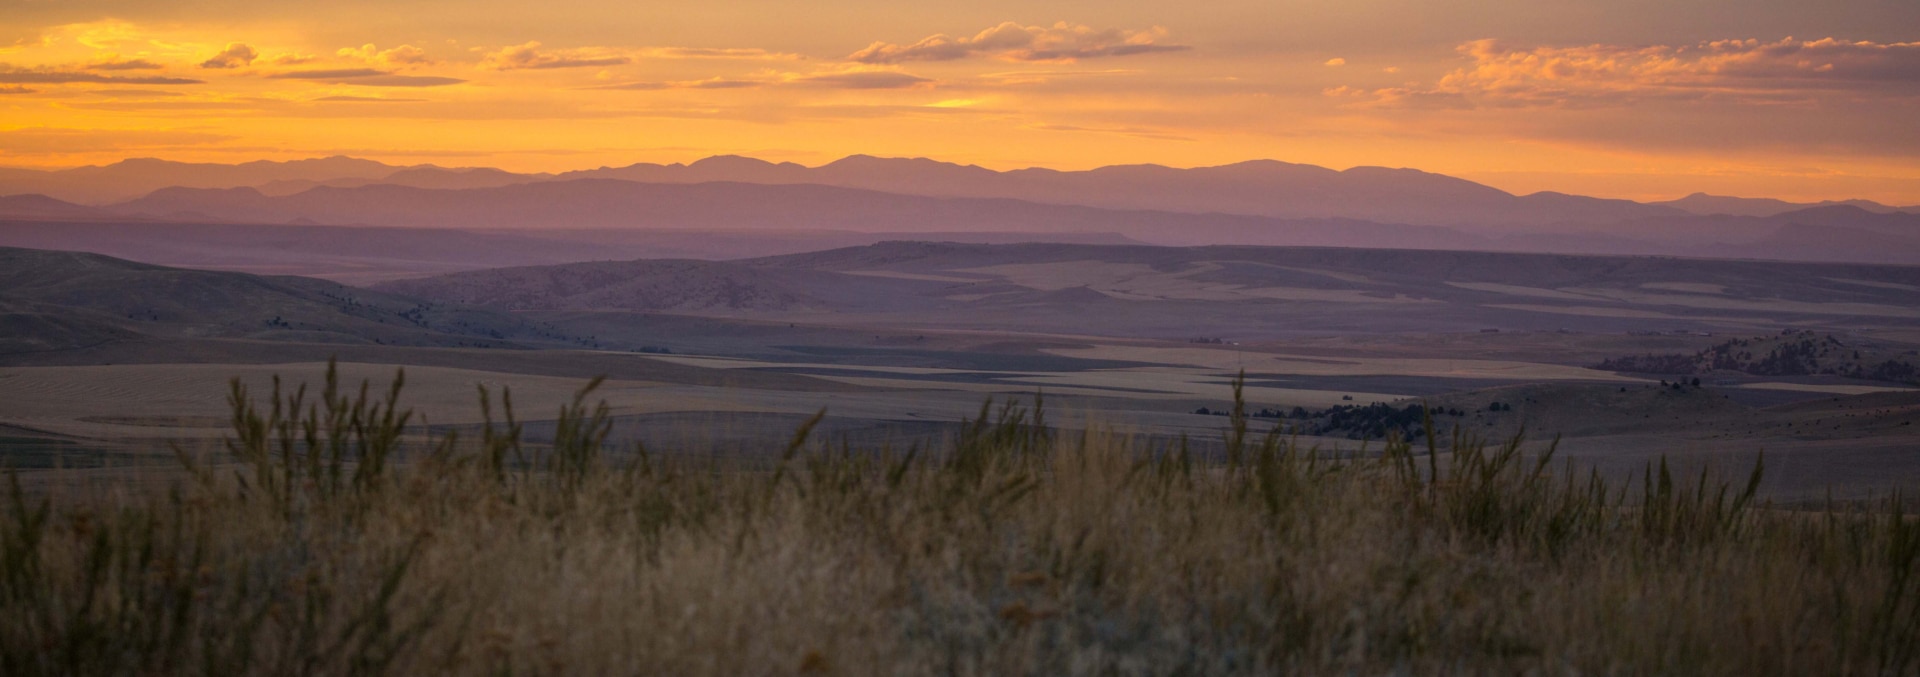 montana land for sale gallatin views at montana ranch